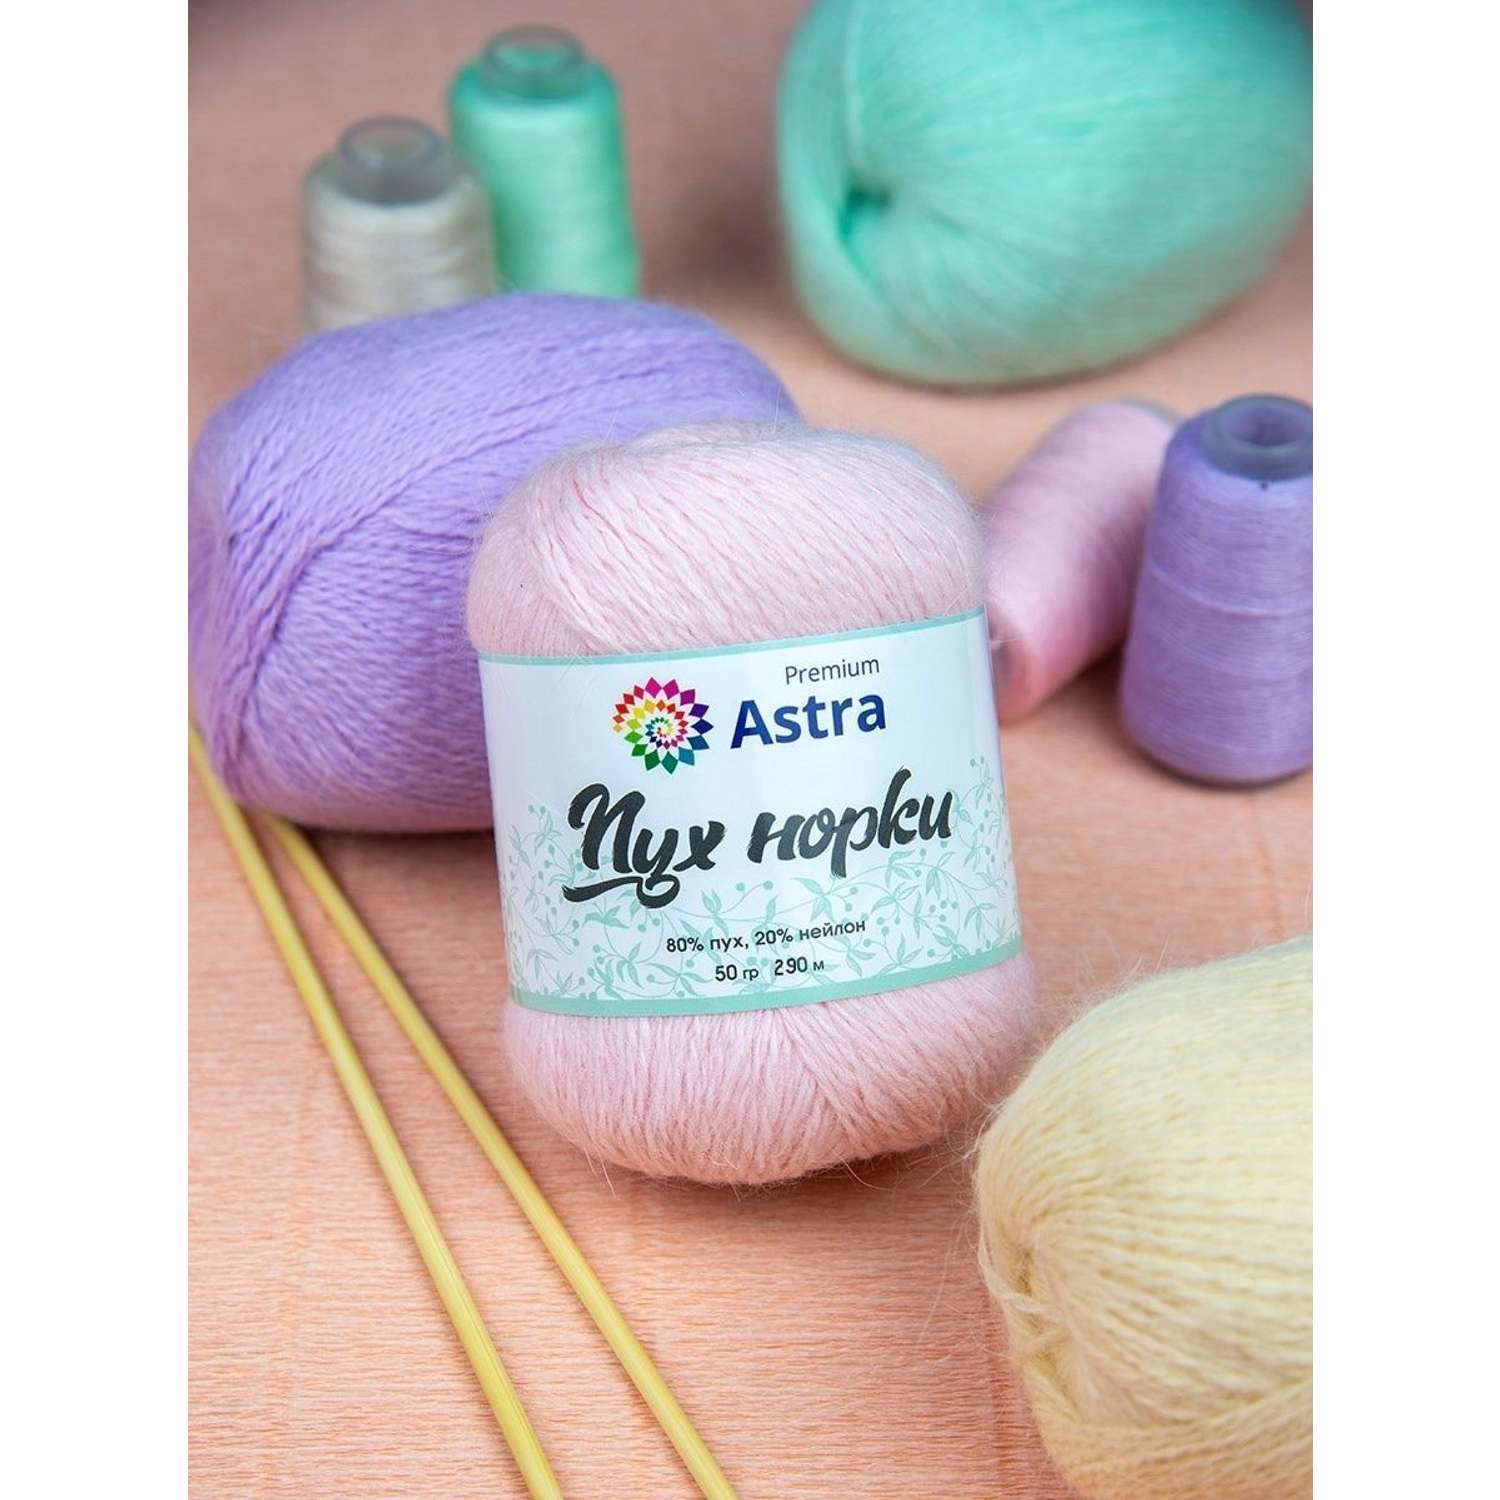 Пряжа Astra Premium Пух норки Mink yarn воздушная с ворсом 50 г 290 м 041 светлая мята 1 моток - фото 5